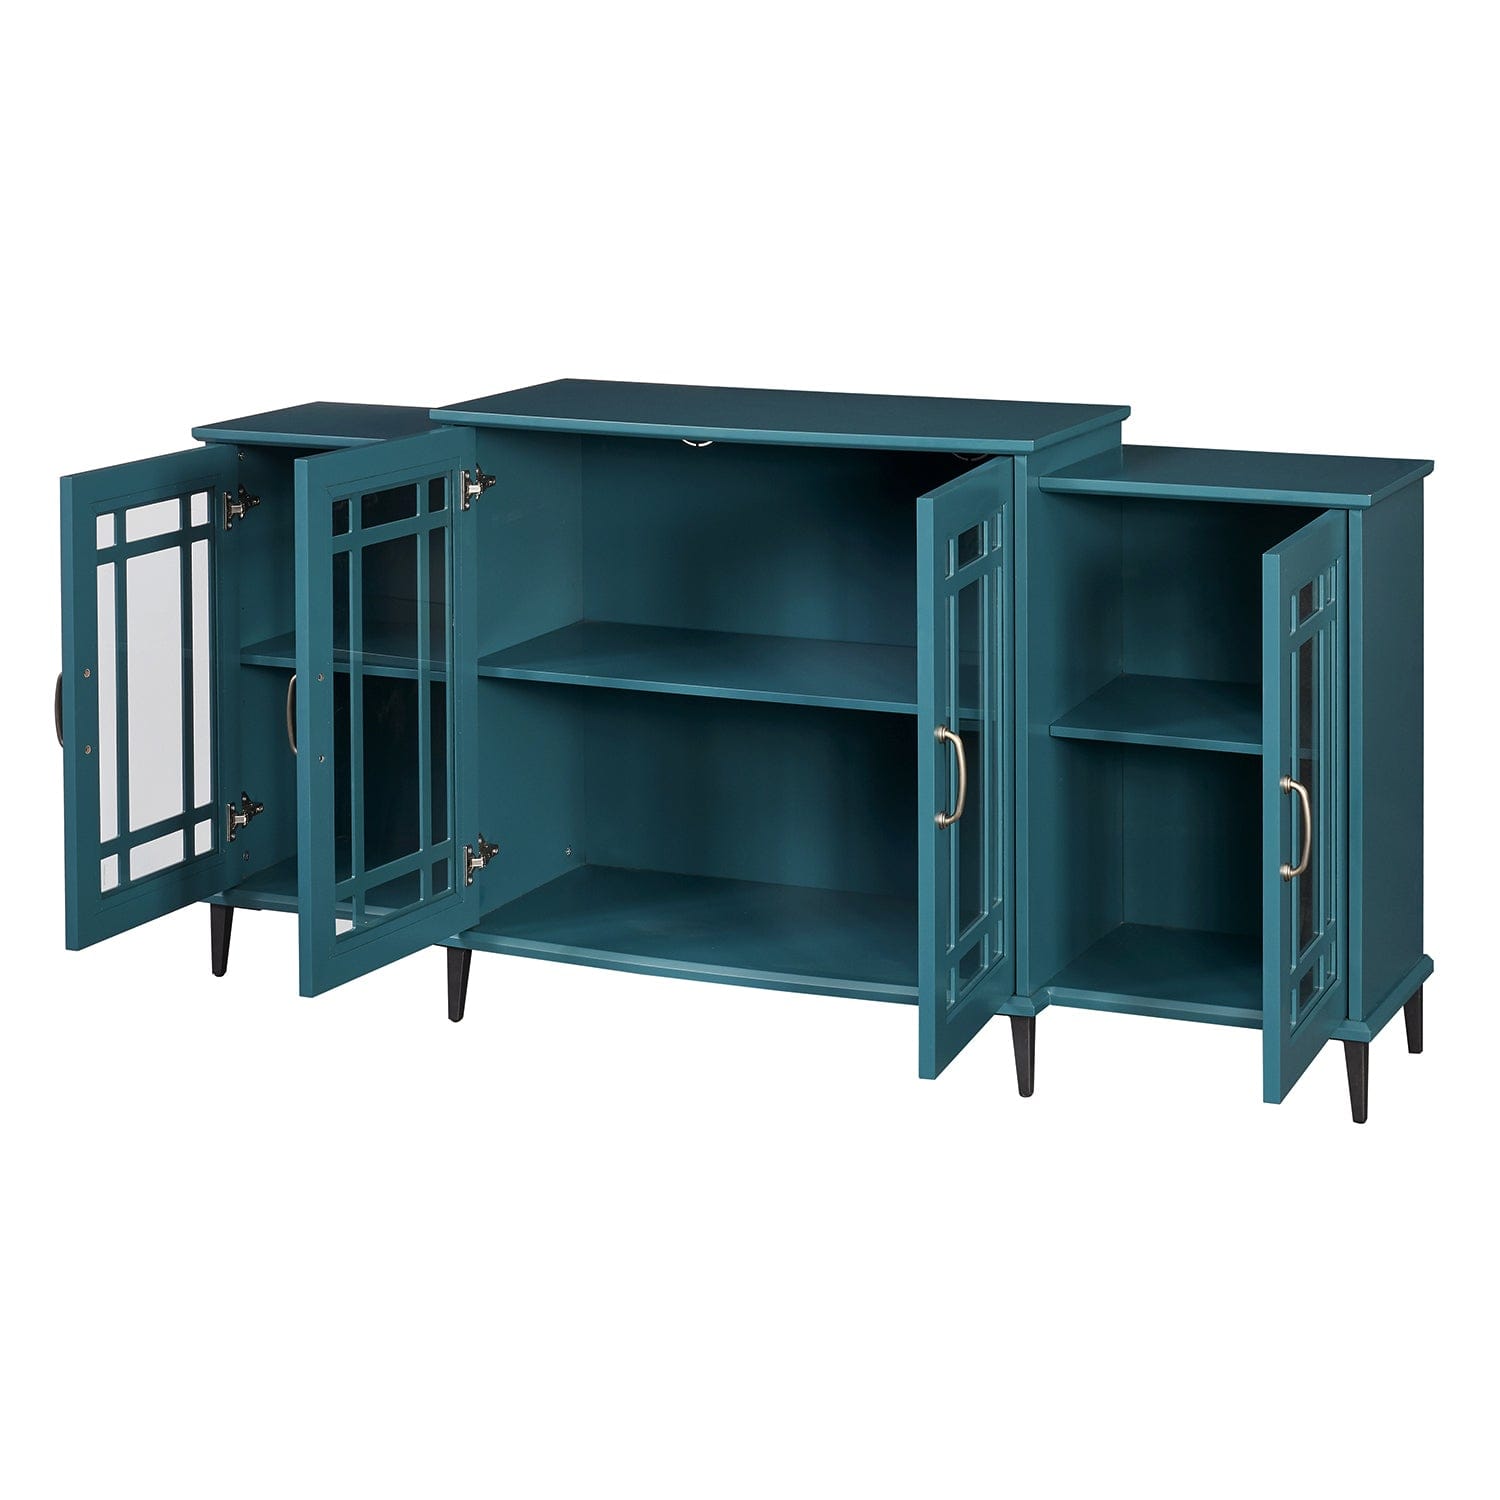 1st Choice Furniture Direct Storage Cabinet 1st Choice Multifunctional Storage Cabinet in Teal Blue w/ Glass Door